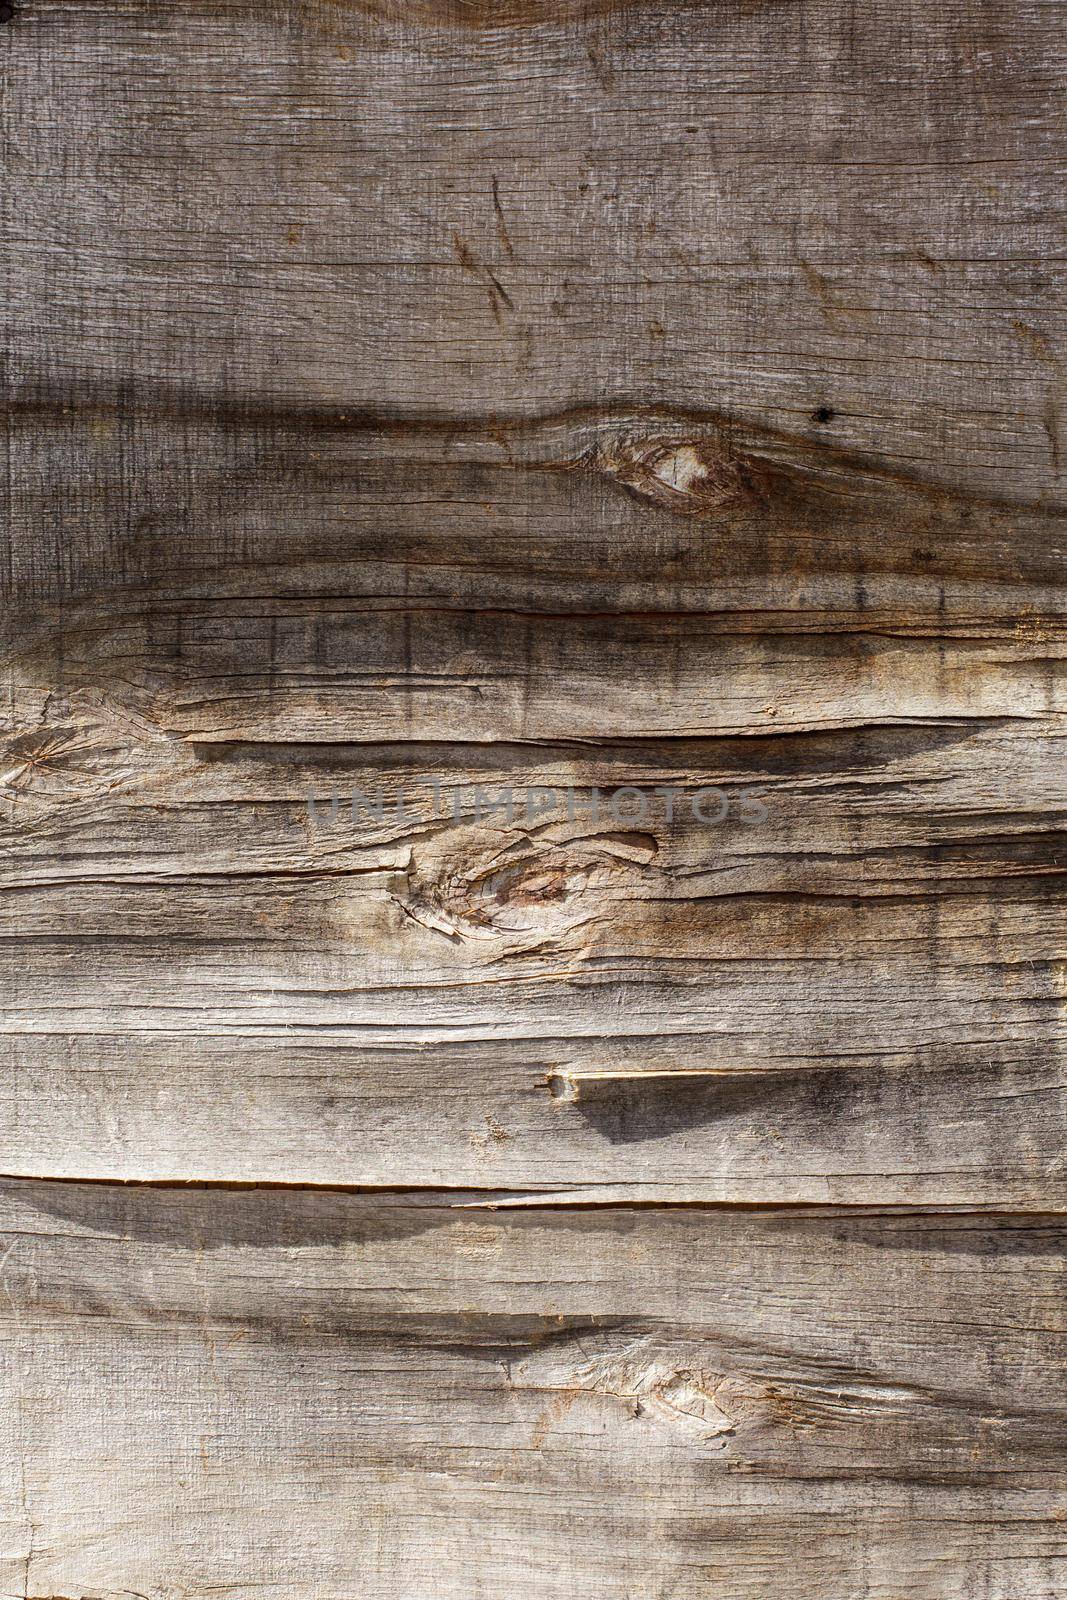 Retro wooden background, cracked plywood wall under the sunshine